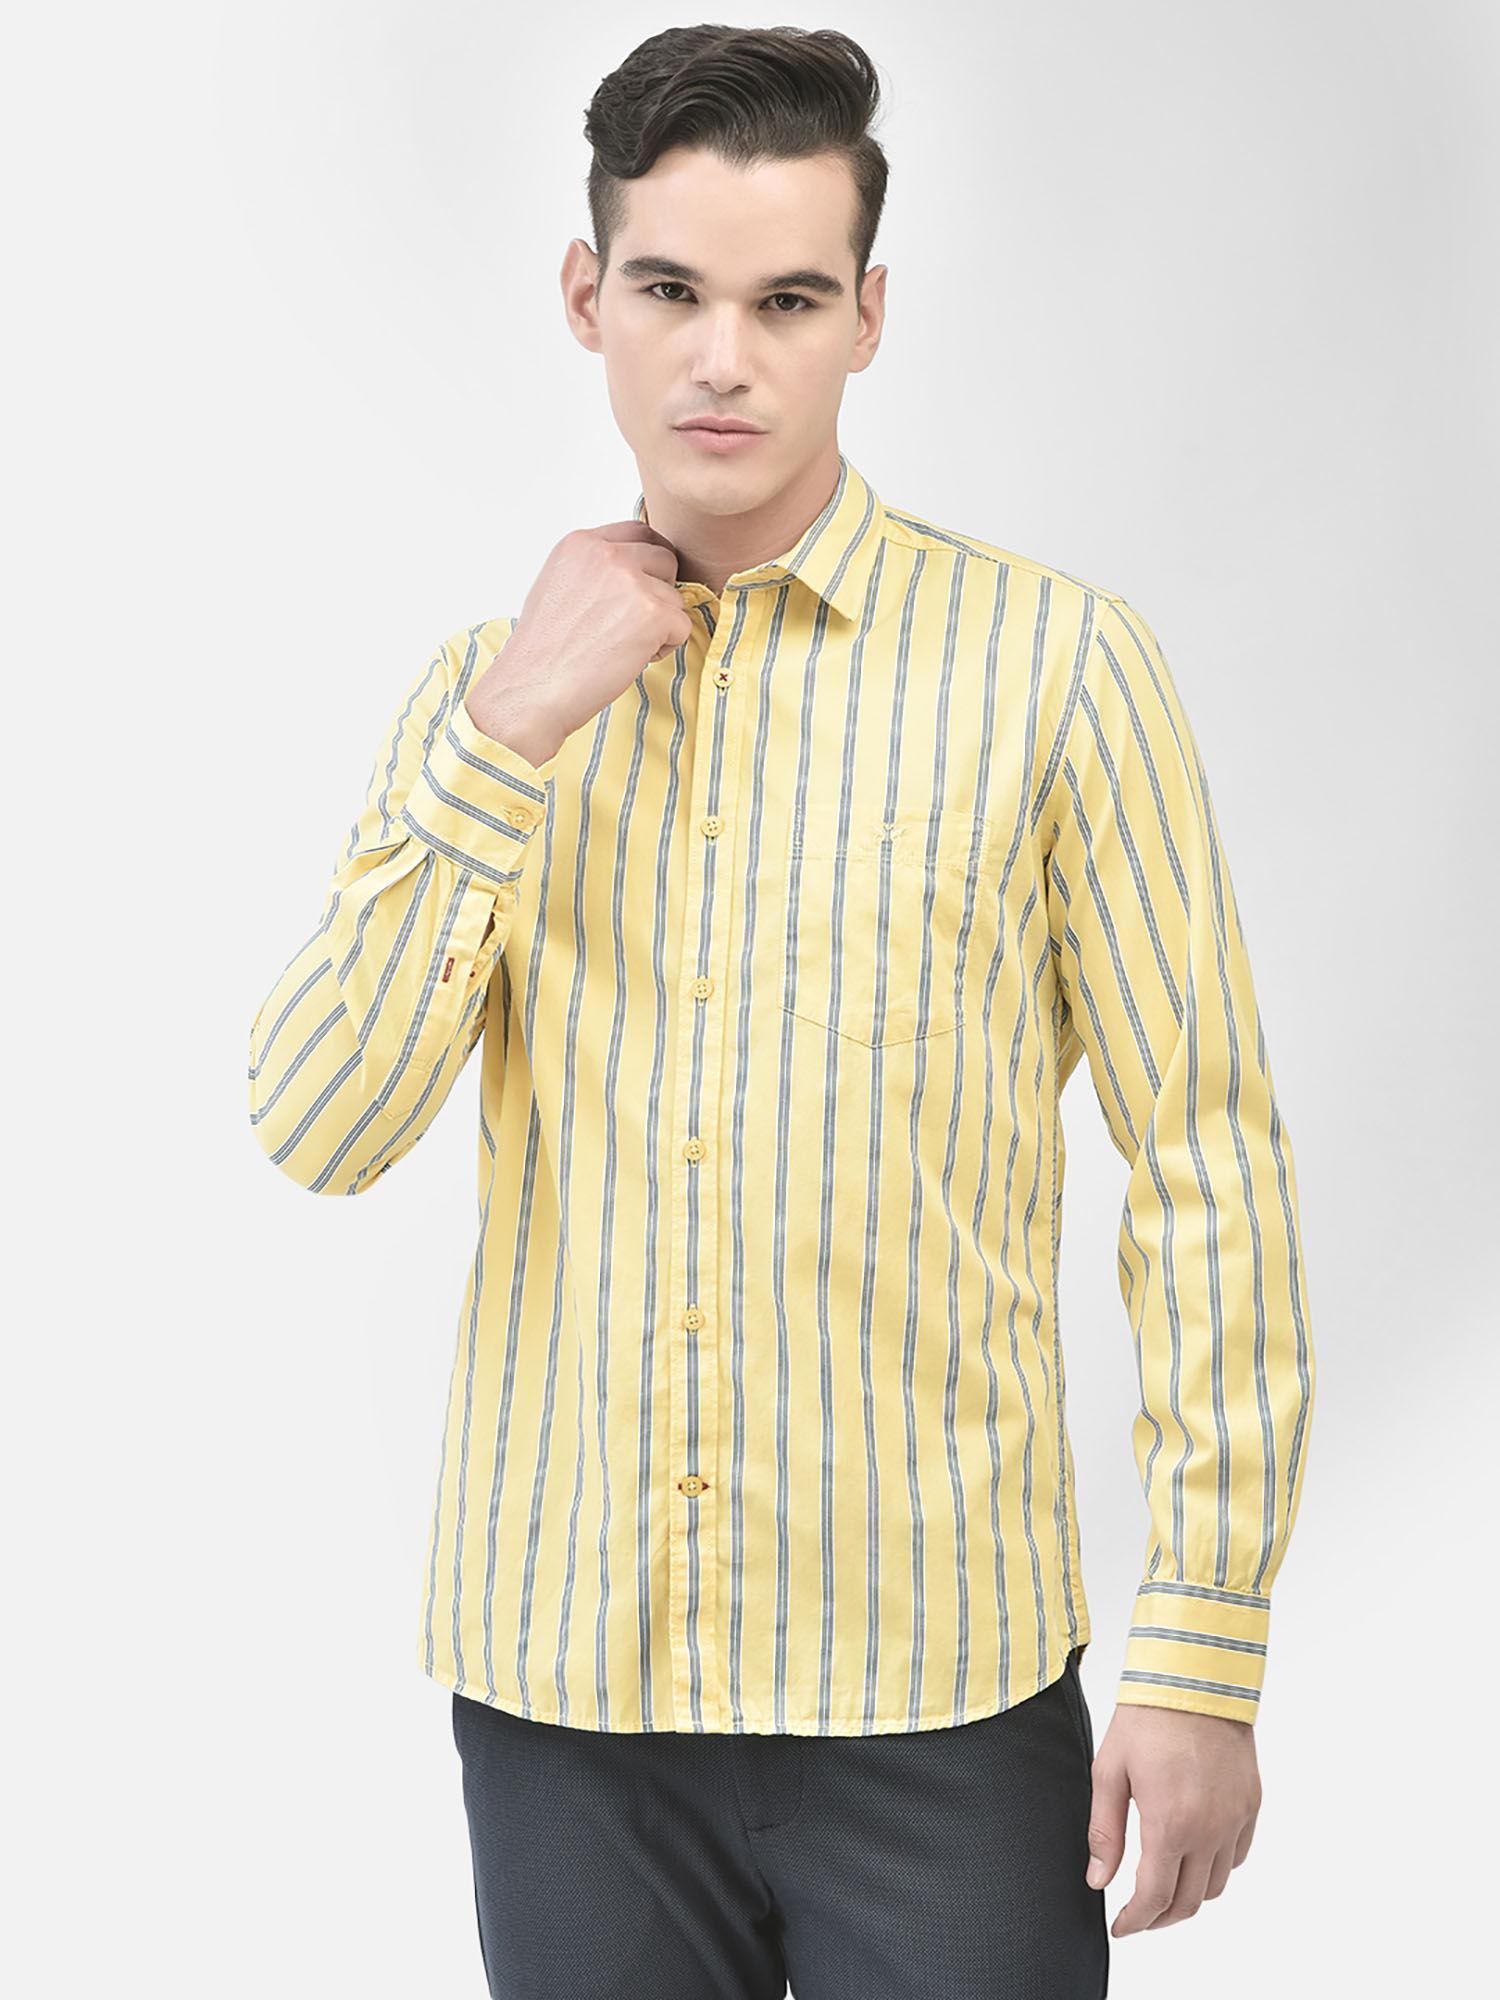 men's-yellow-striped-shirt